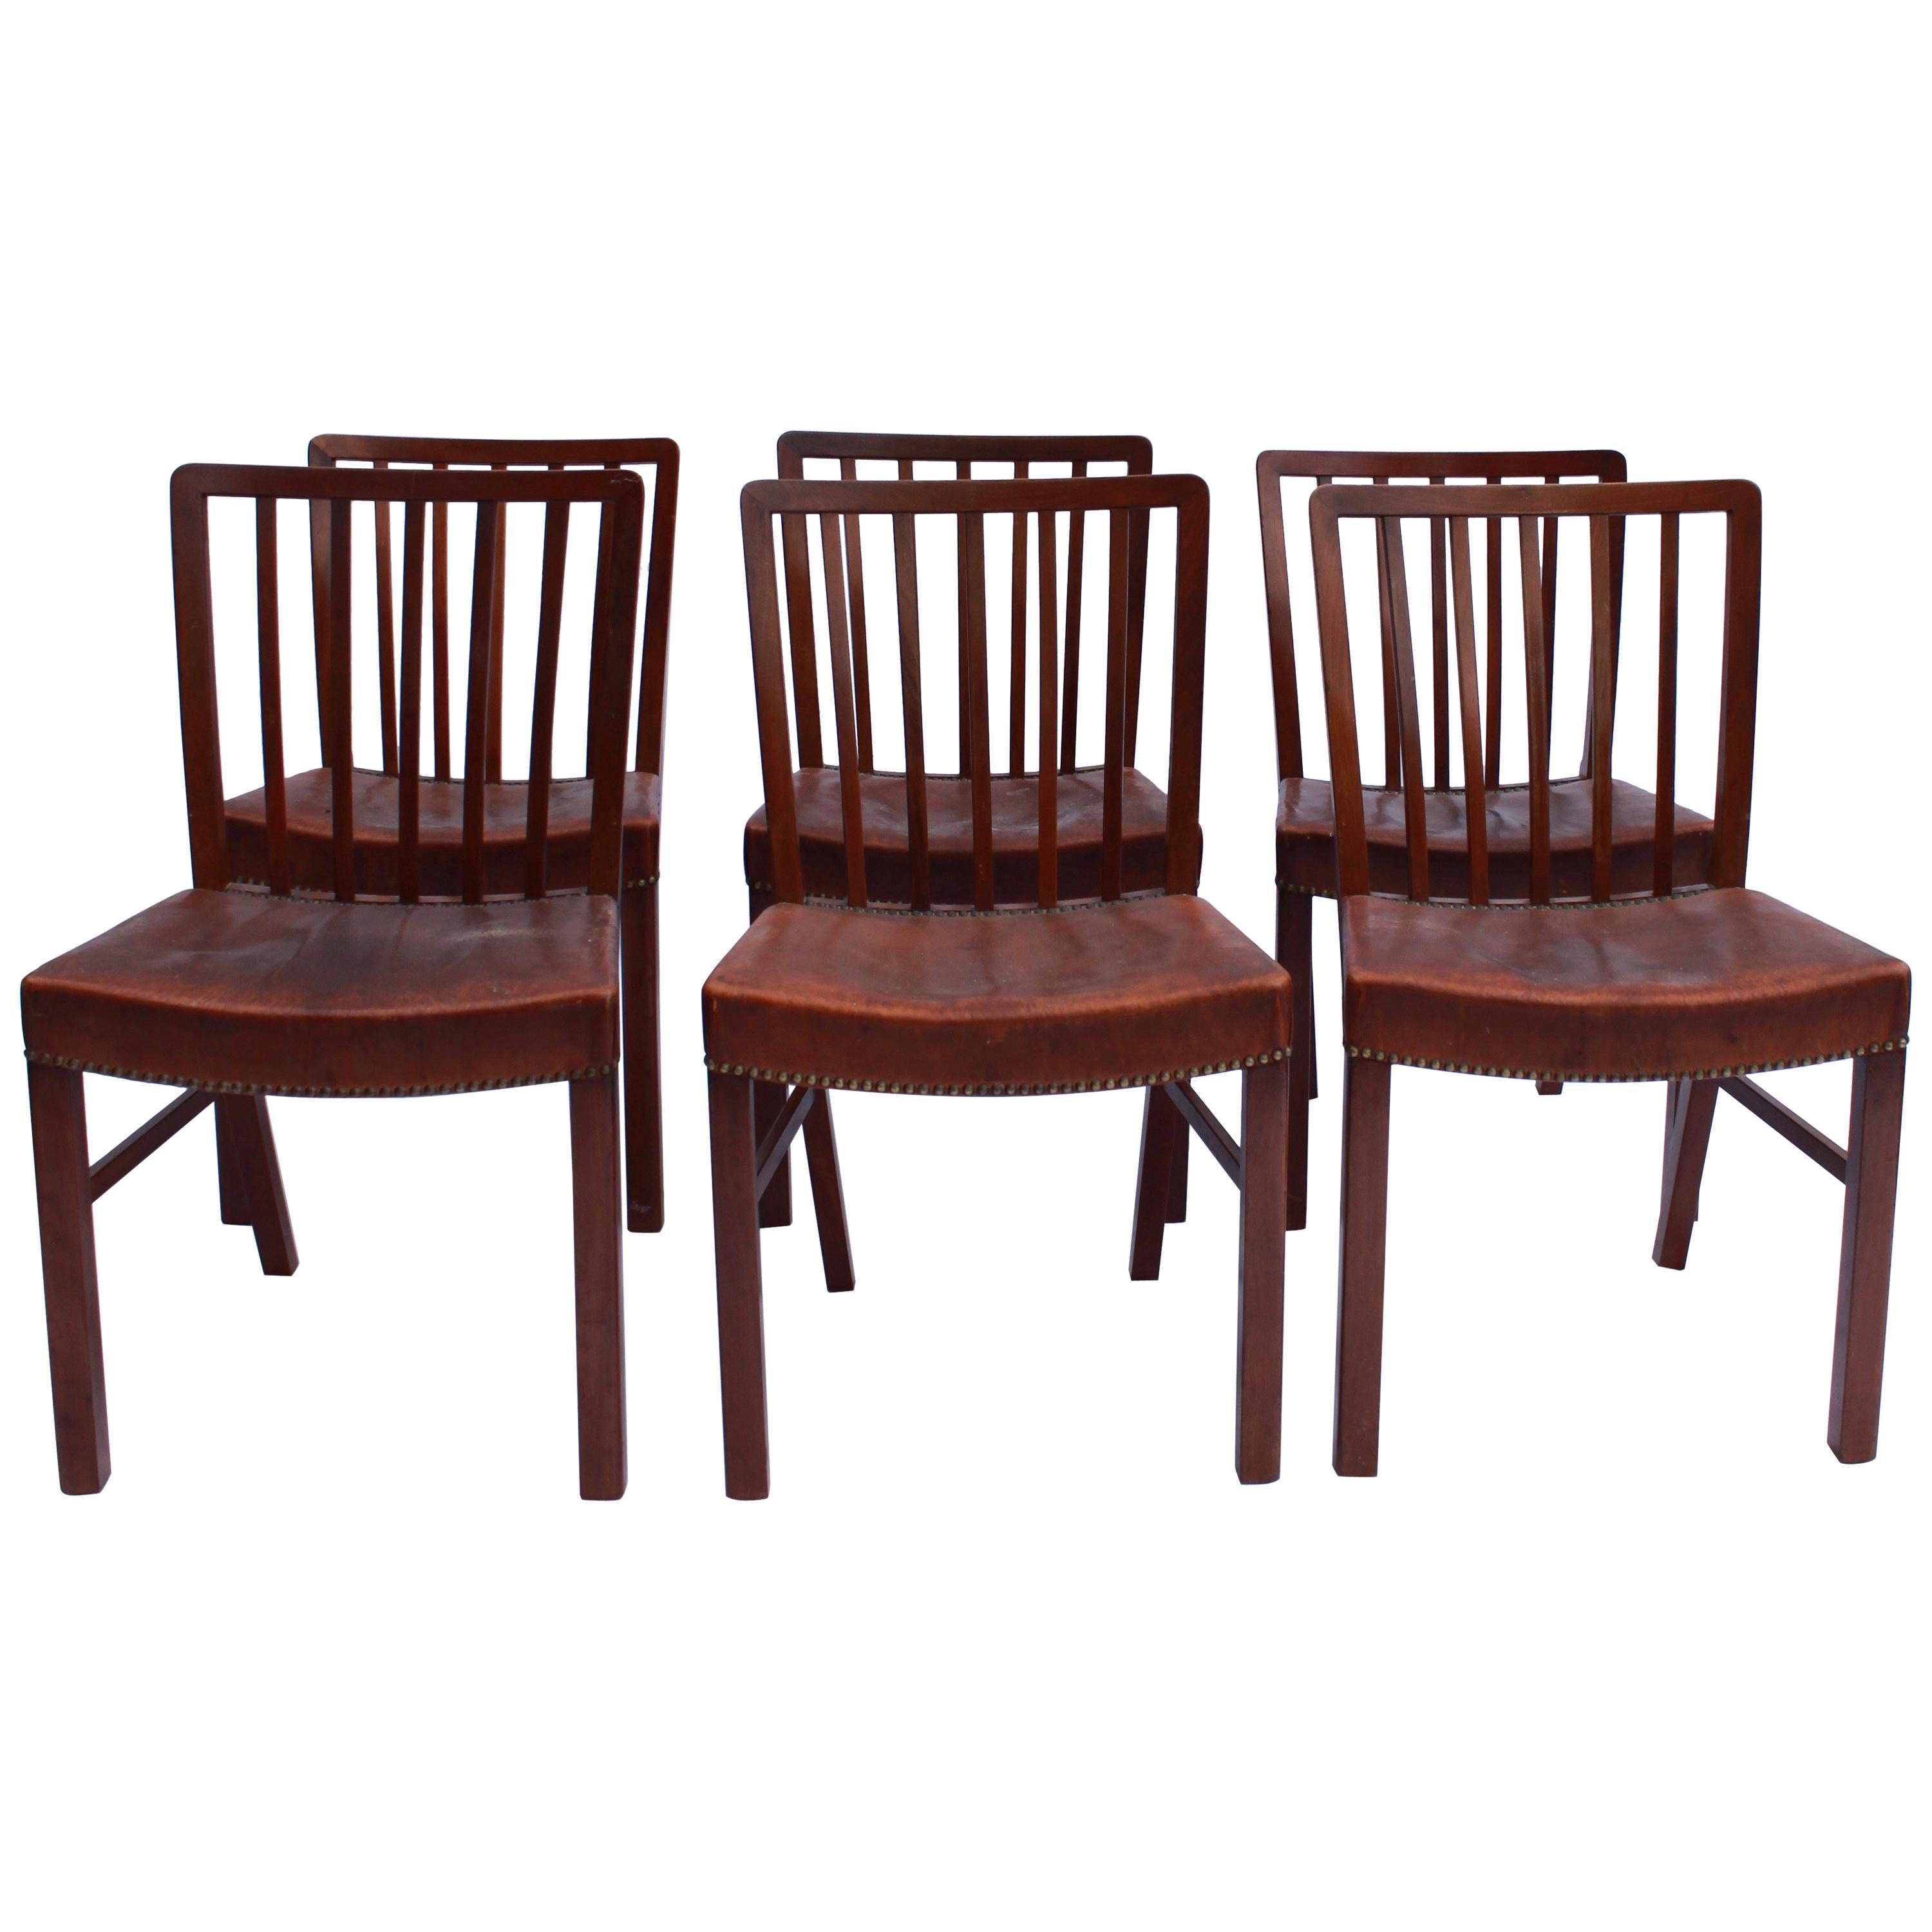 Scandinavian Modern Set of 6 Dining Chairs in Mahogany by Fritz Hansen, 1940s